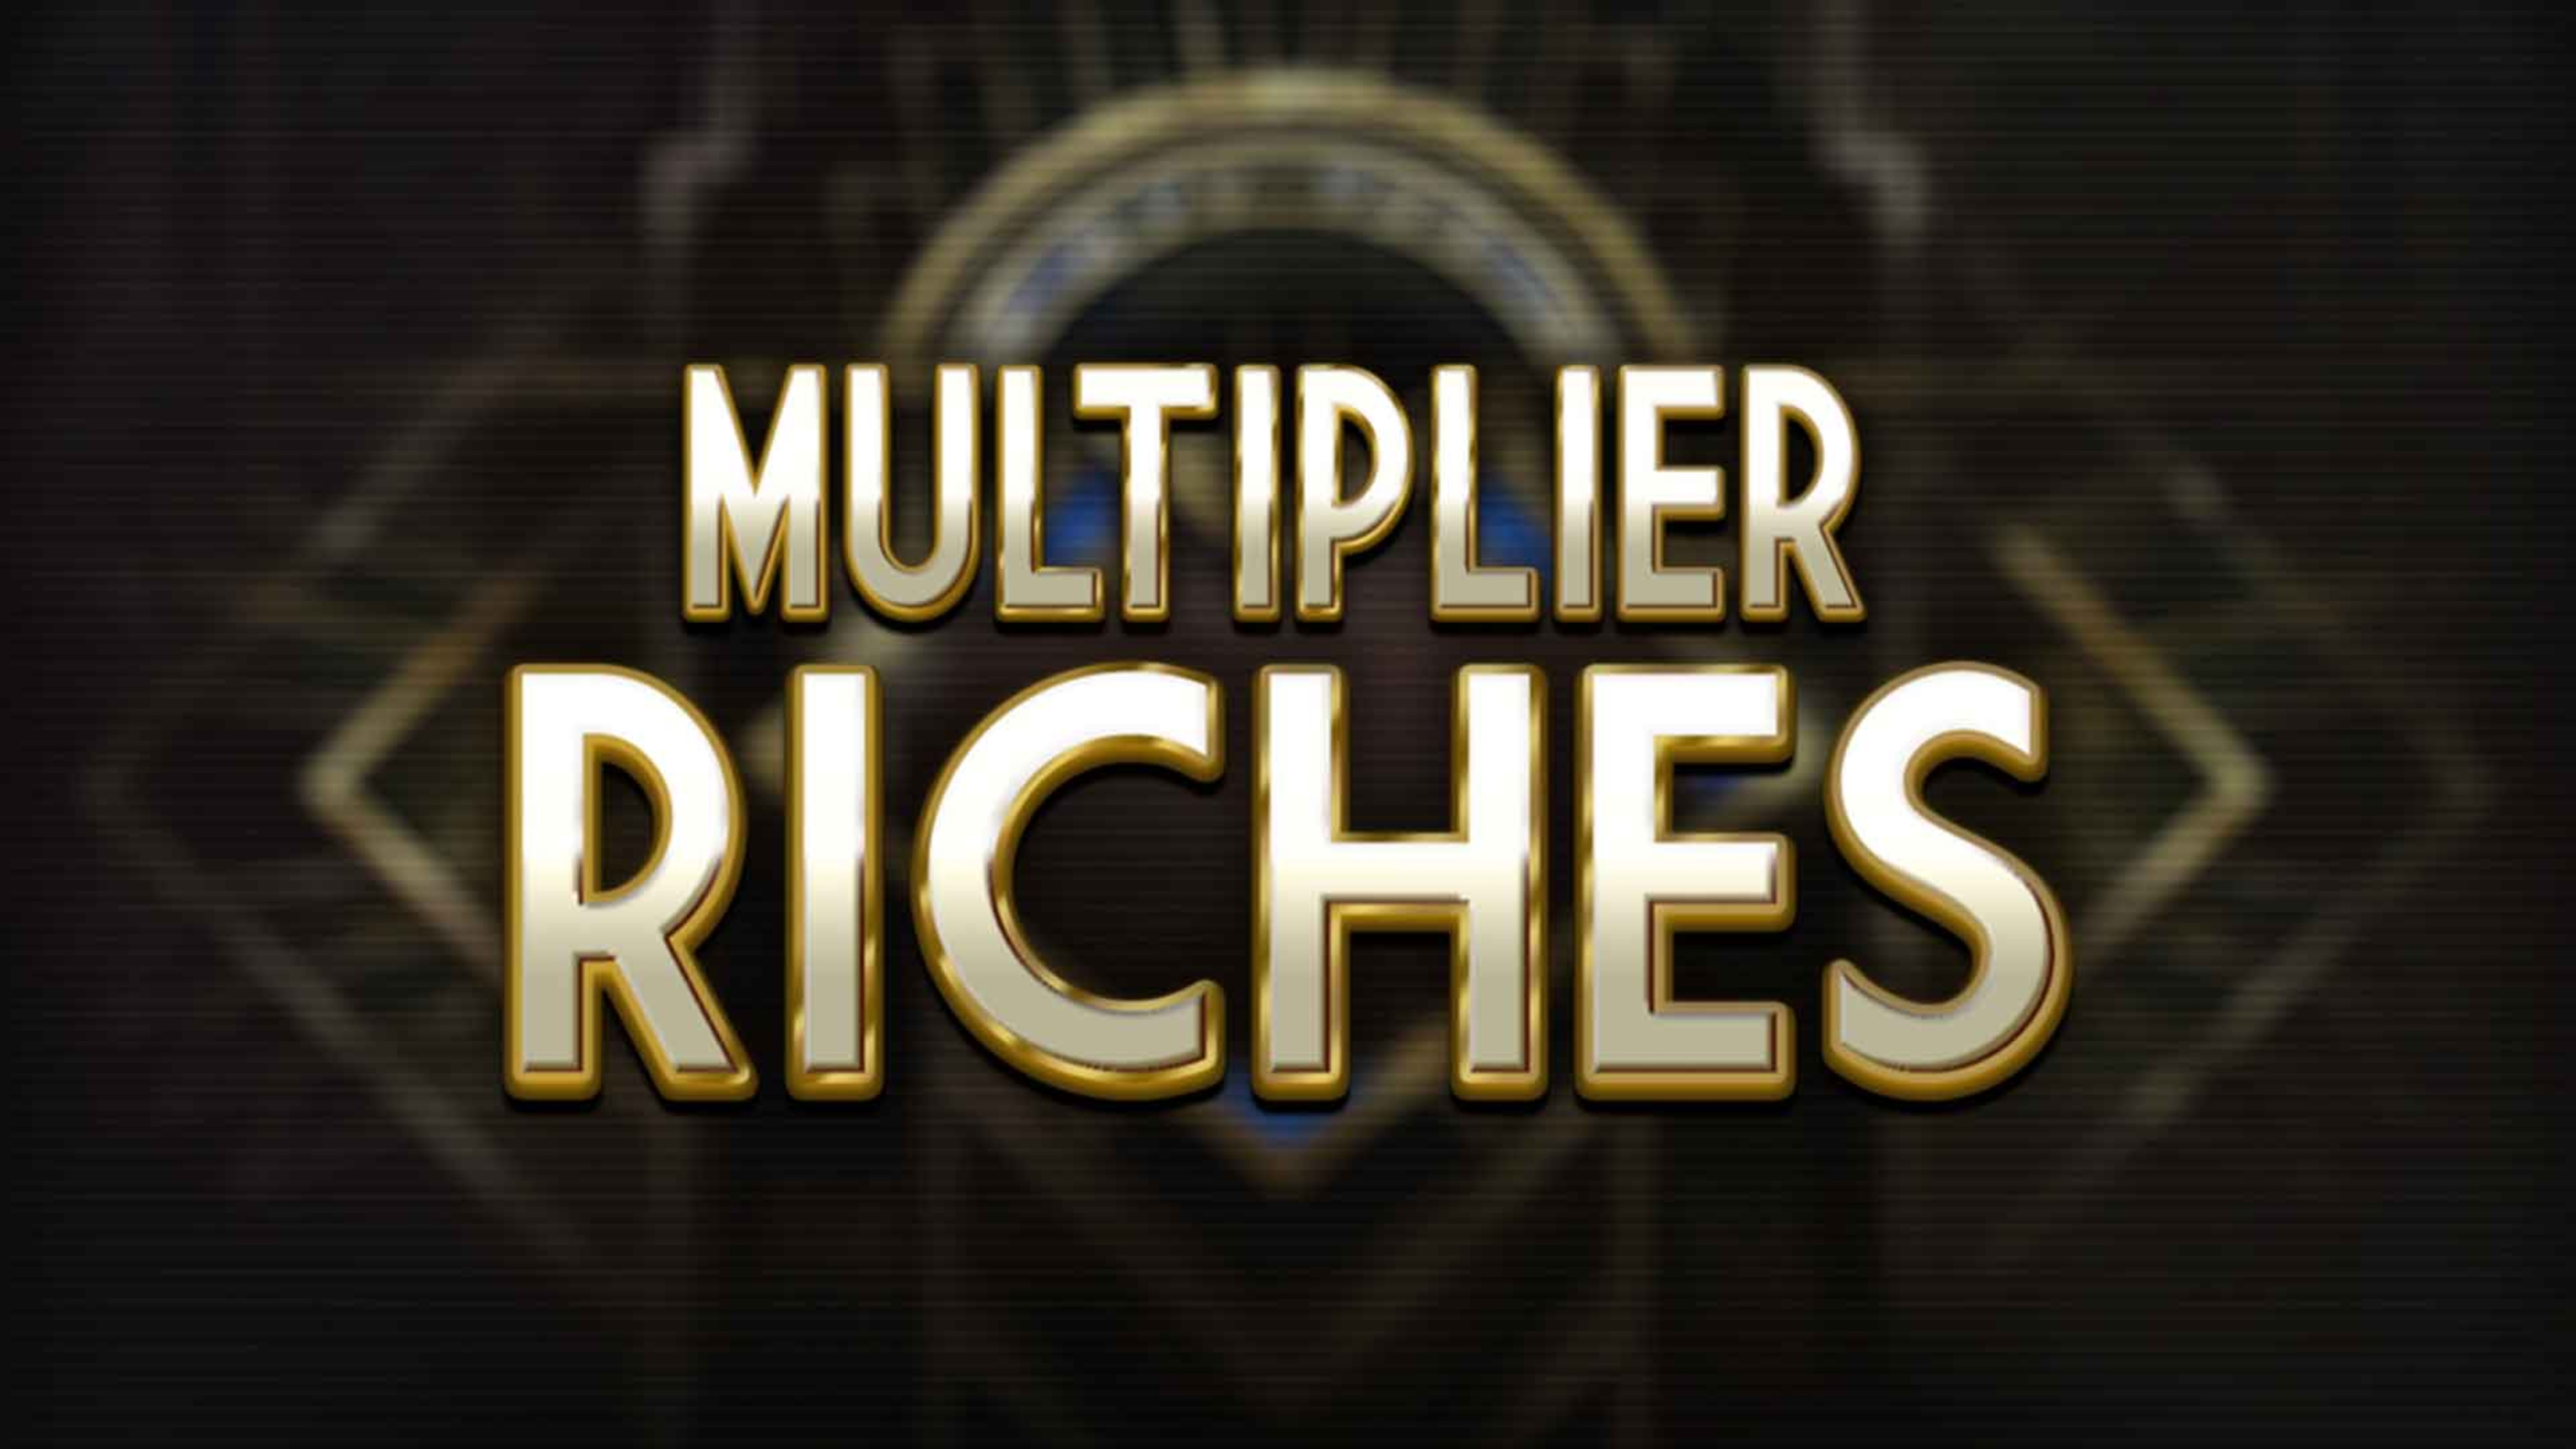 Multiplier Riches demo